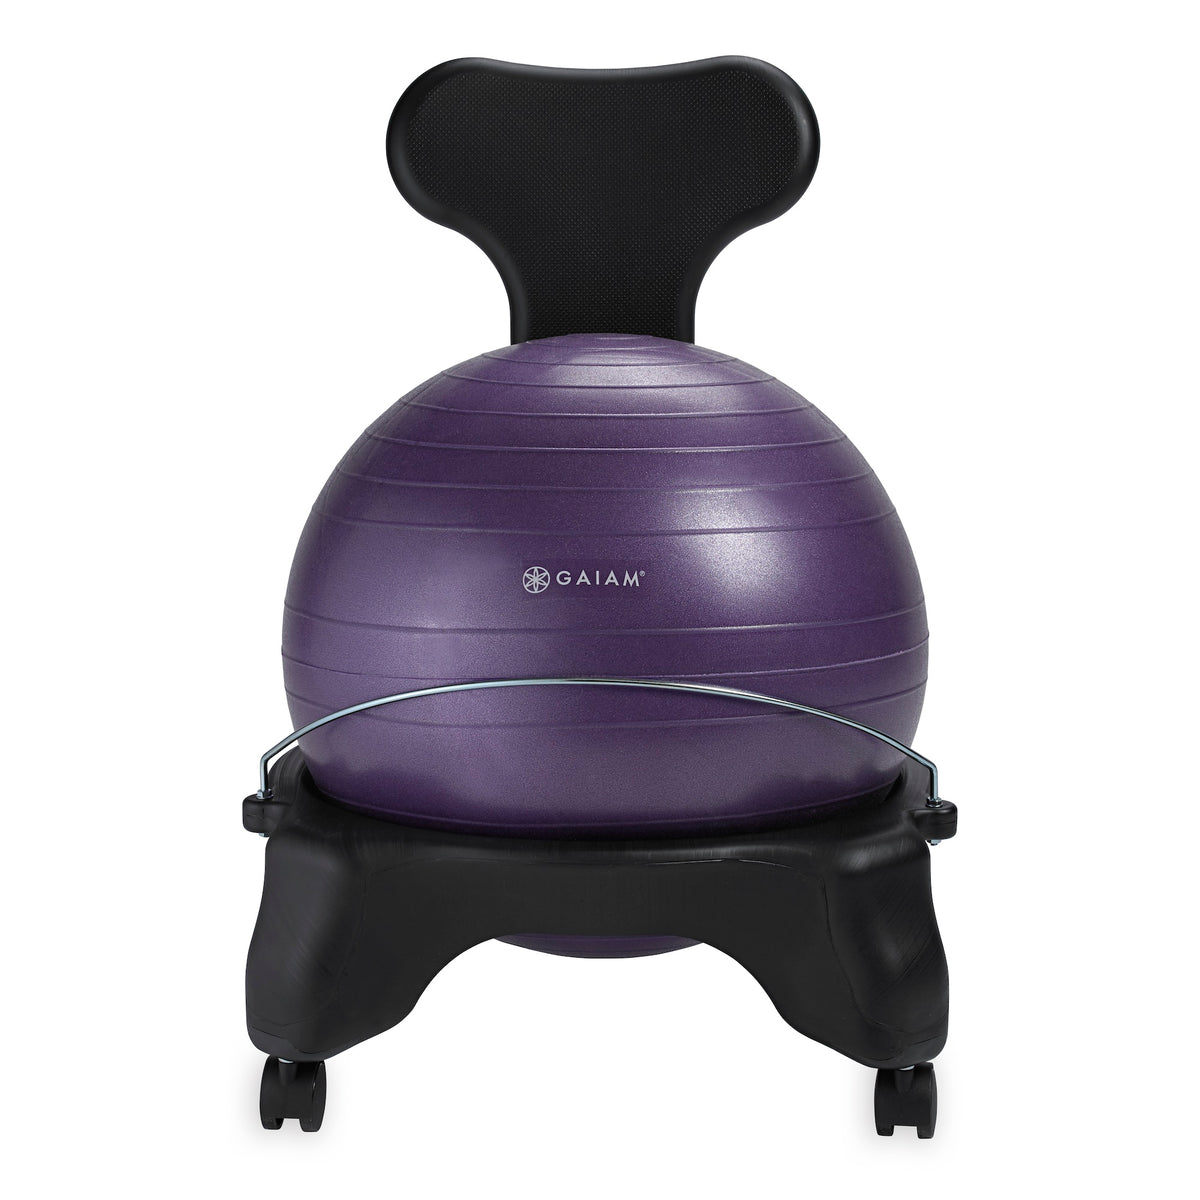 Gaiam Classic Balance Ball® Chair purple front